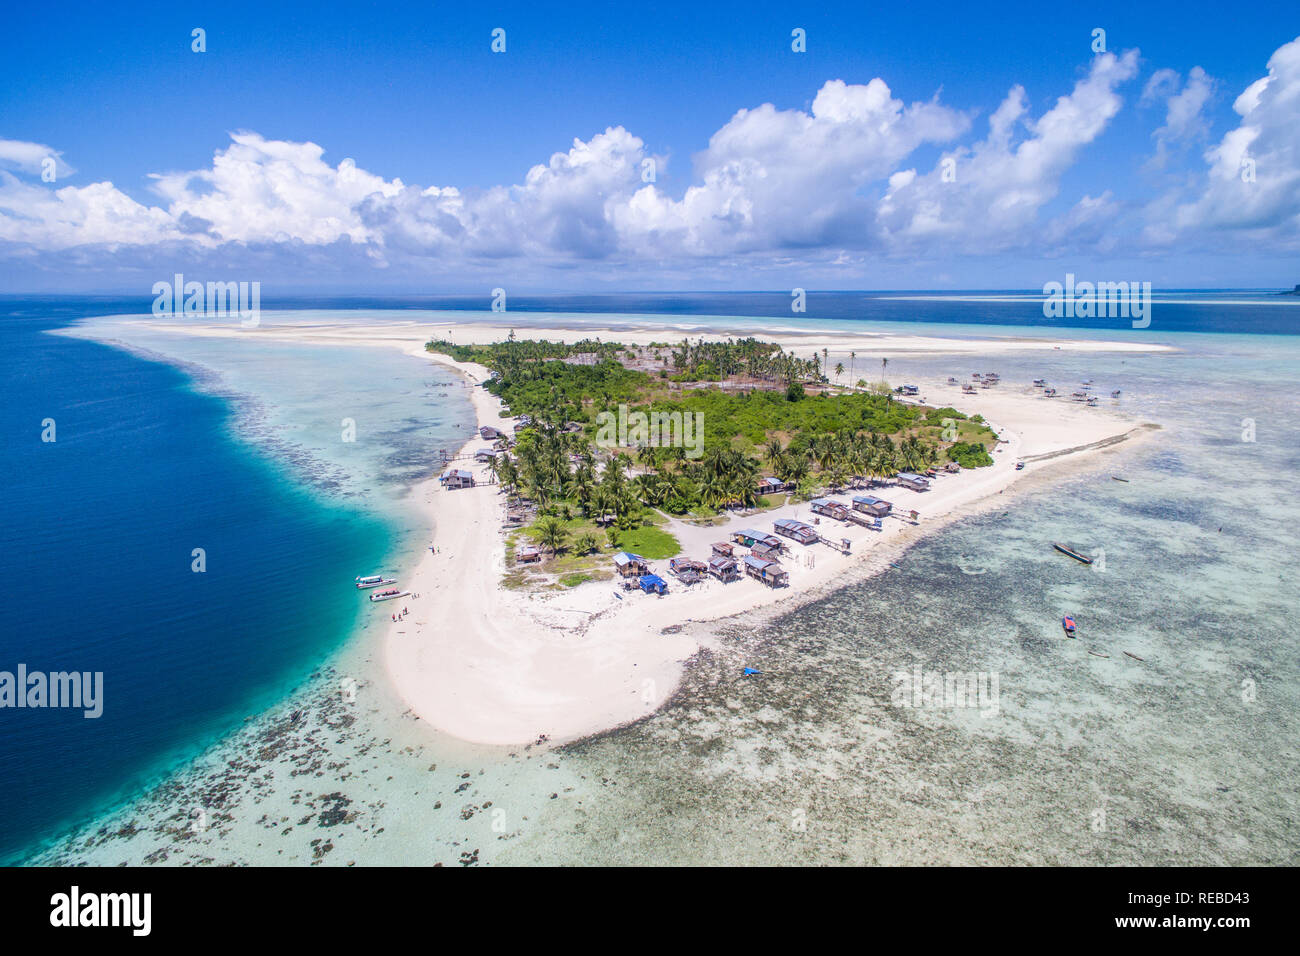 Vista aerea di isola Maiga panorama, splendida laguna blu e barriera corallina. Foto Stock